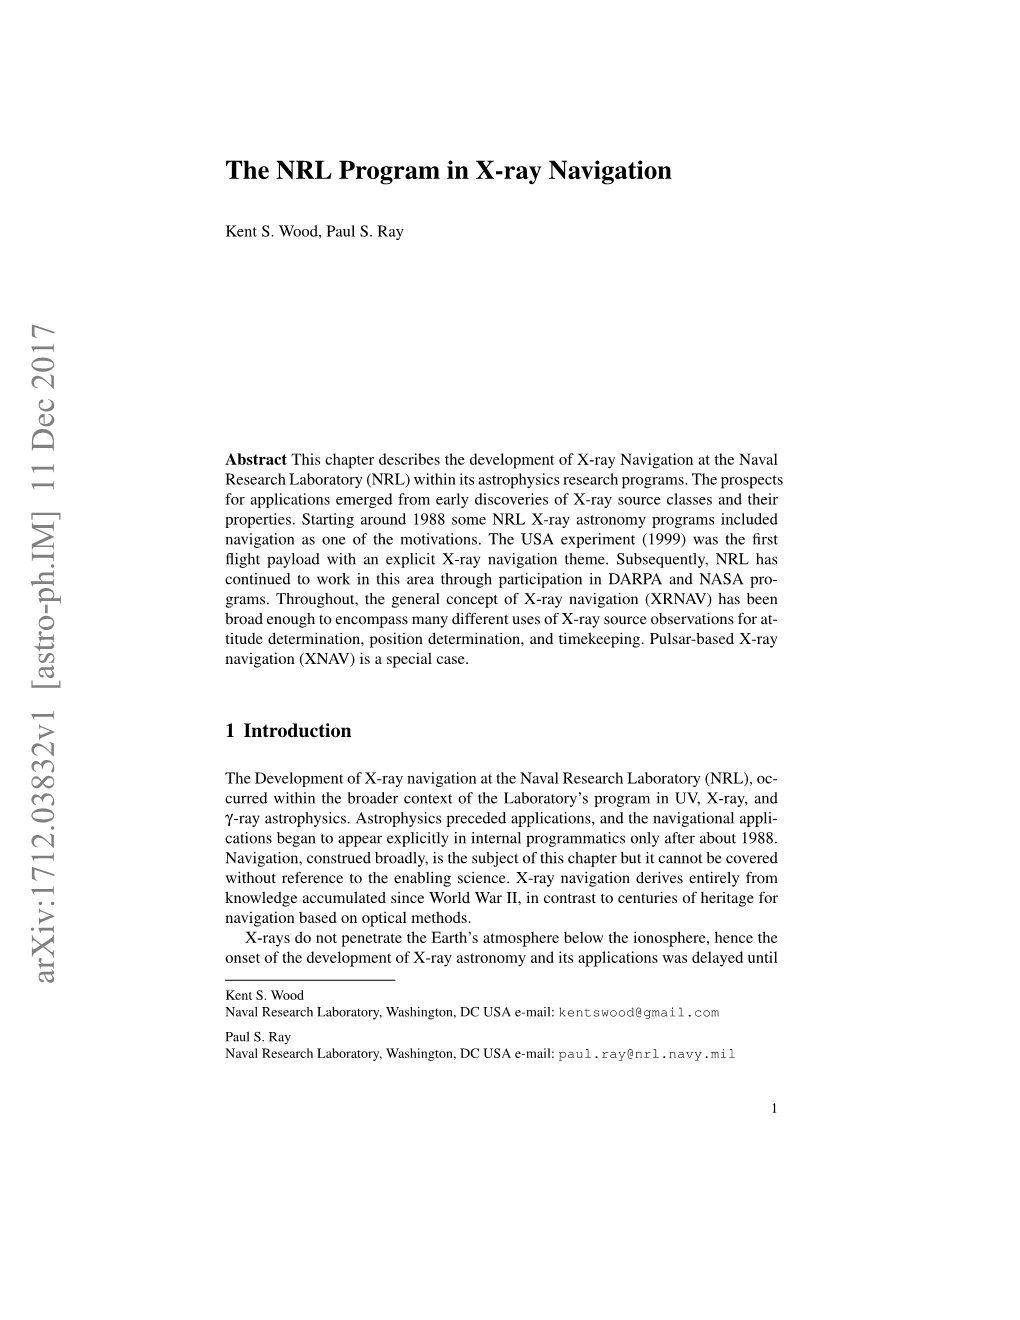 The NRL Program in X-Ray Navigation